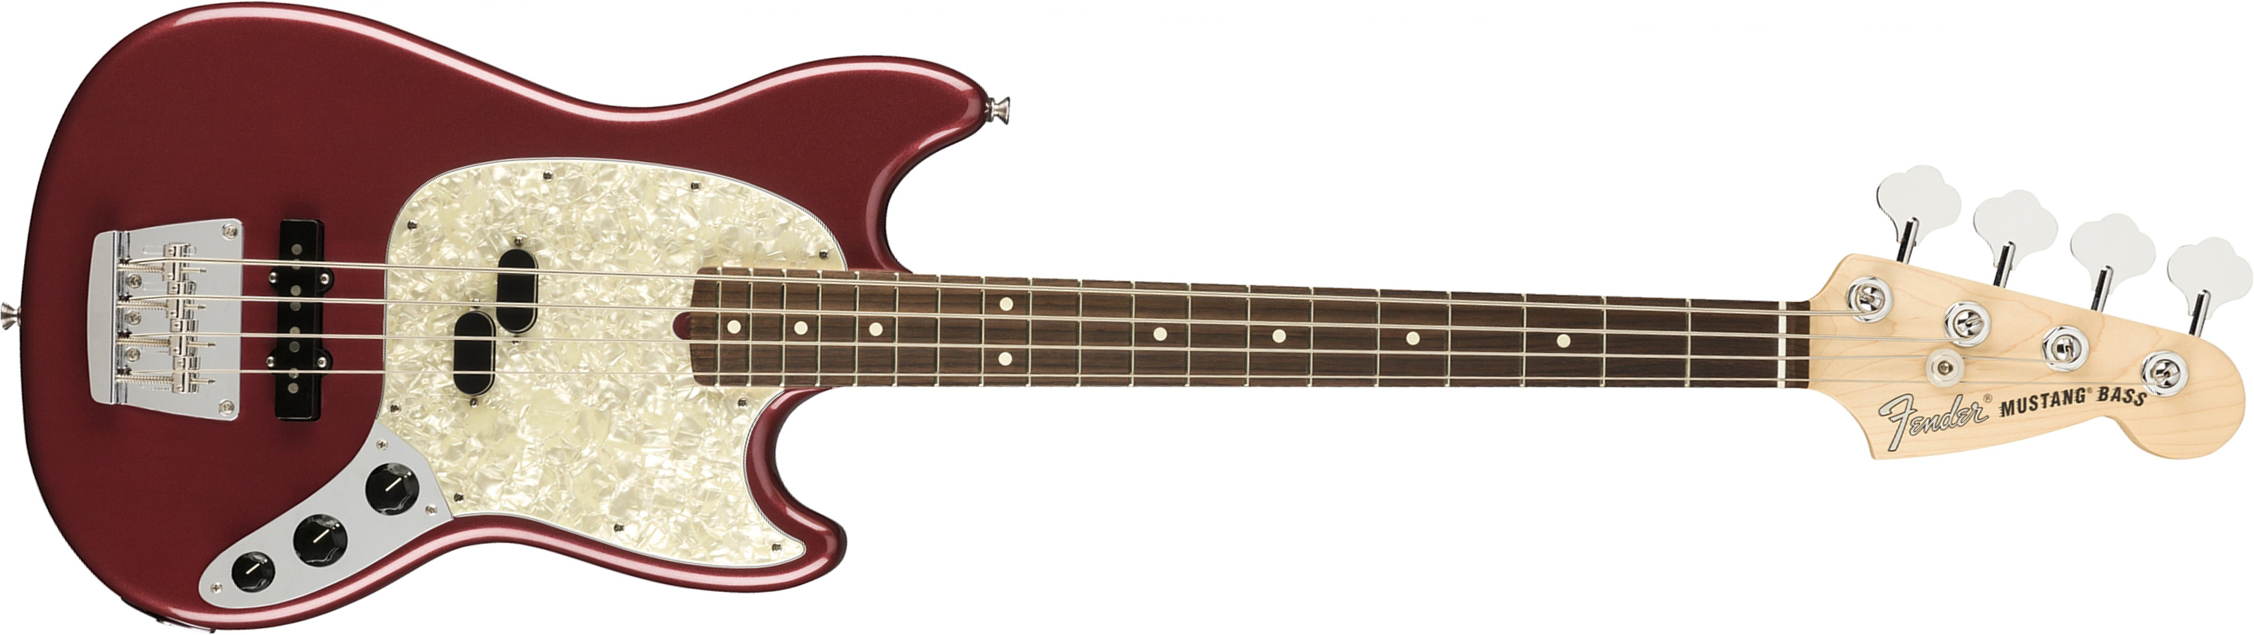 Fender Mustang Bass American Performer Usa Rw - Aubergine - Bajo eléctrico para niños - Main picture